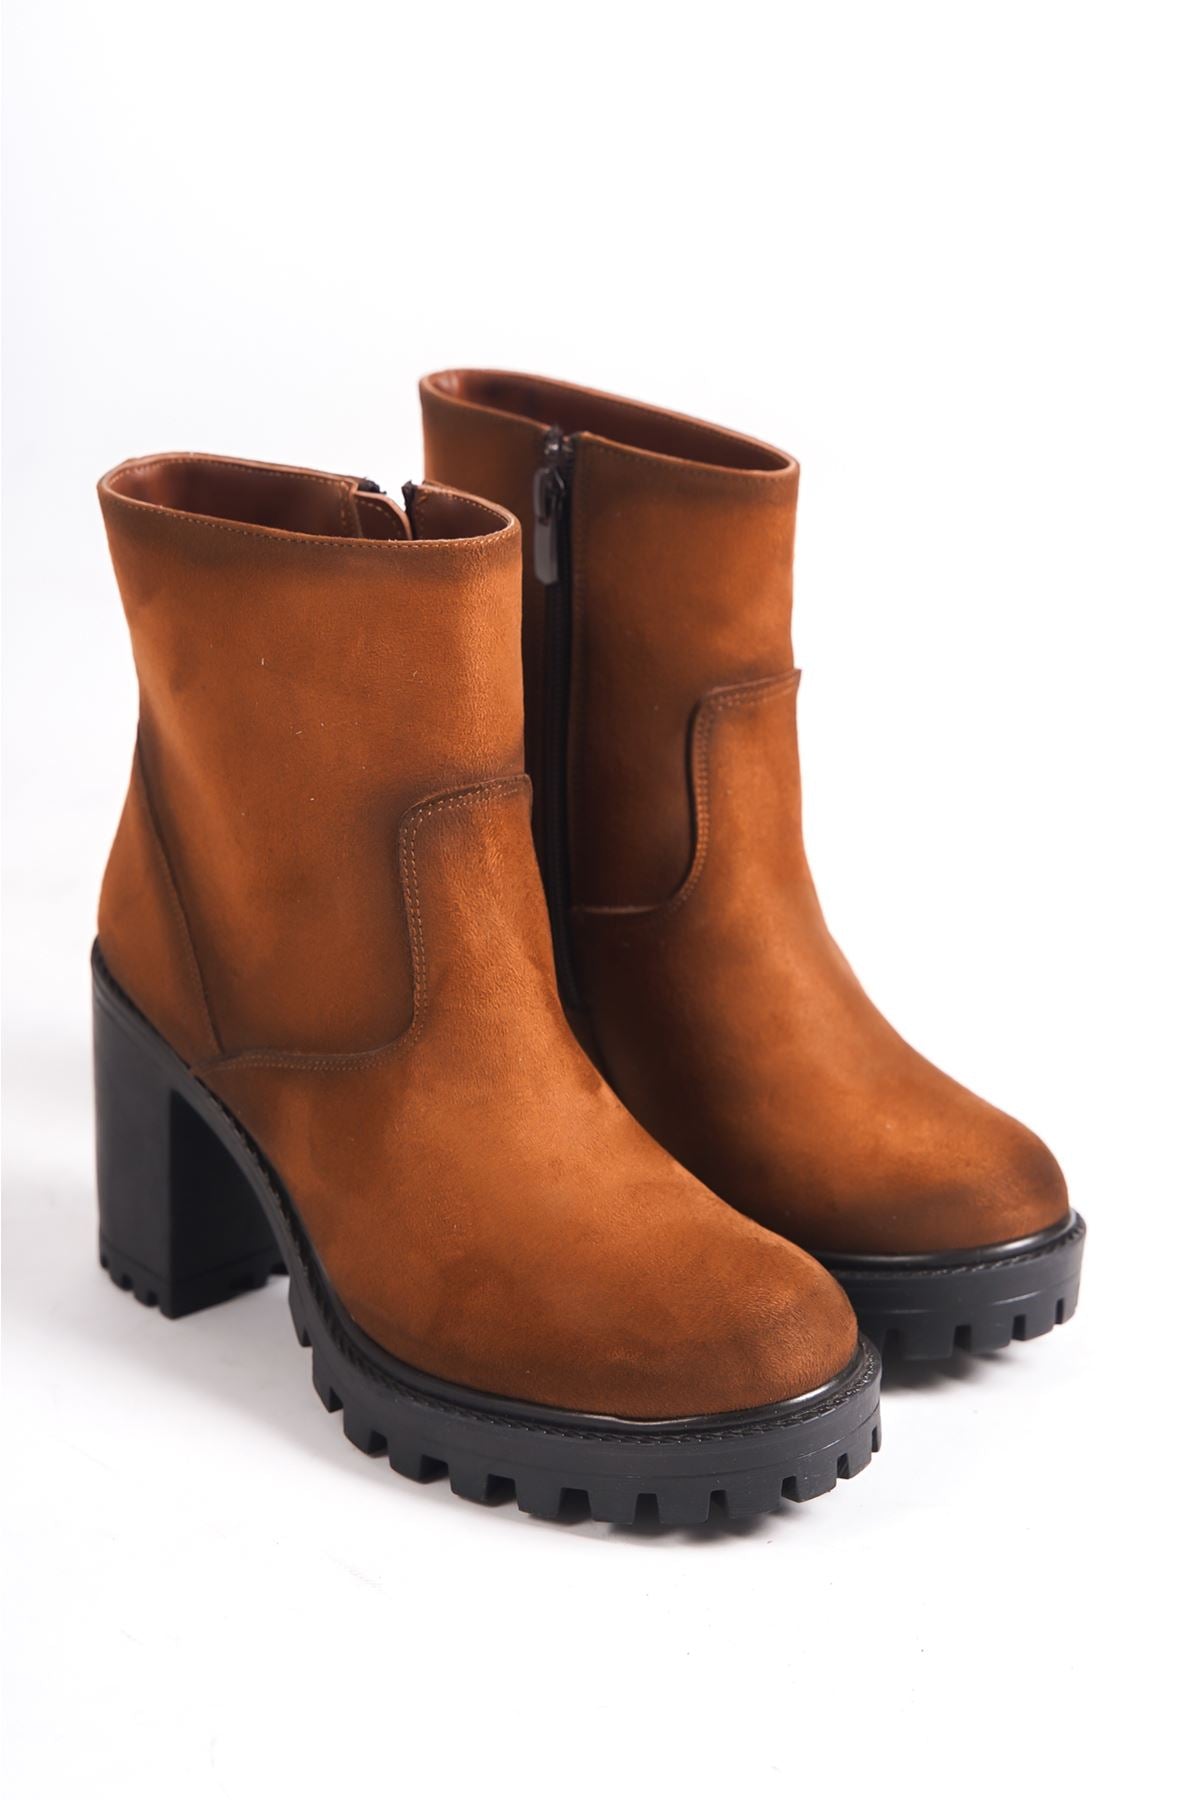 Nawen Tan Zippered Women's Heeled Boots - STREETMODE ™